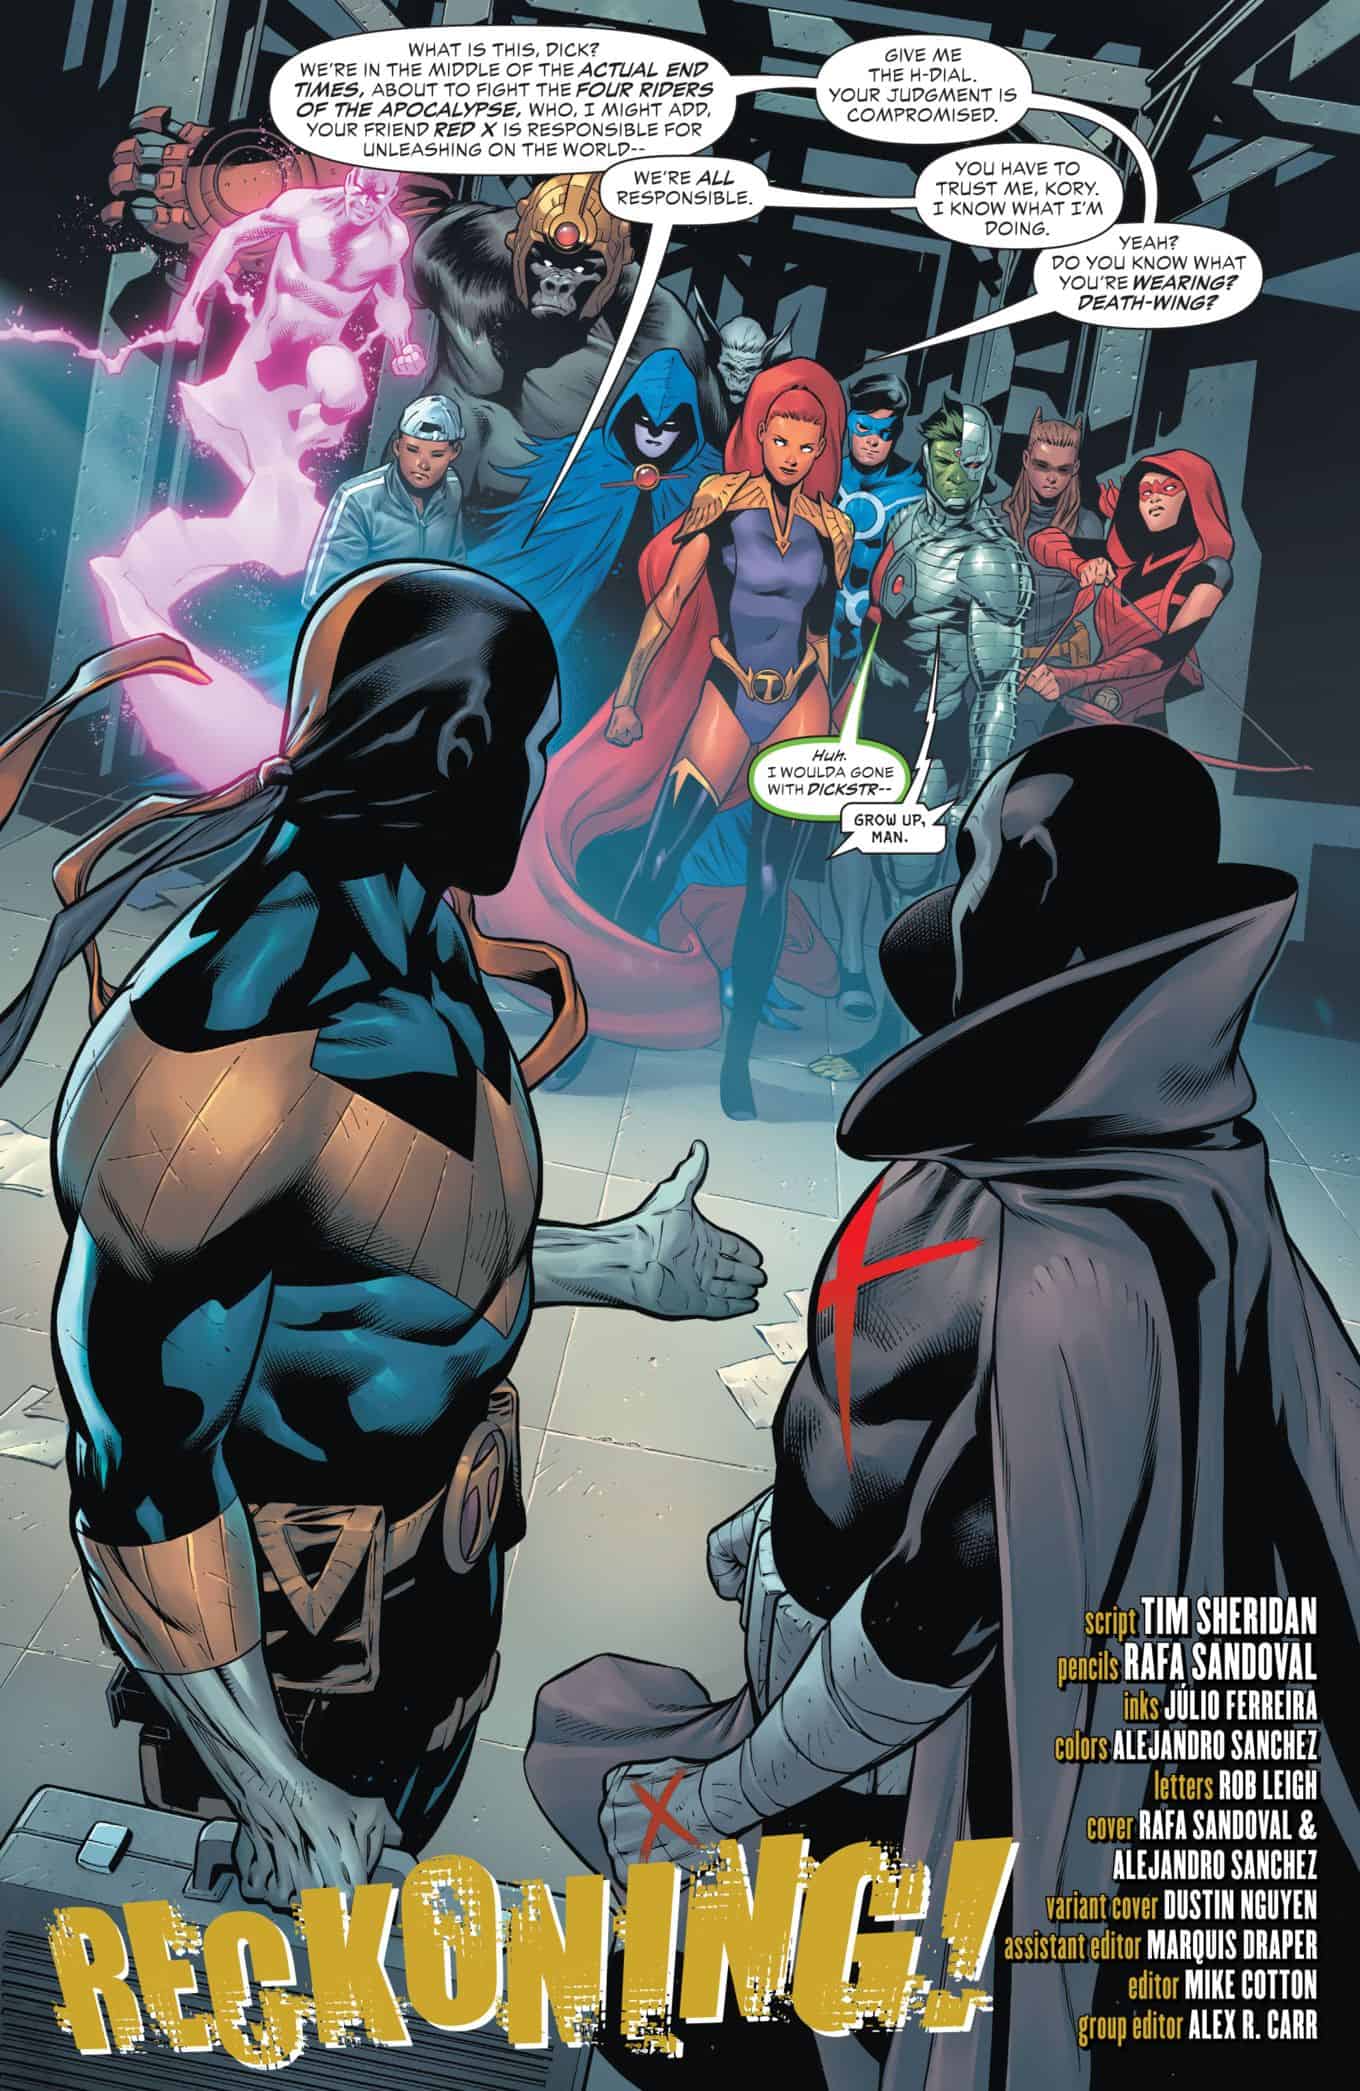 DC Titans on X: now THAT'S a transformation 😱 #dctitans   / X